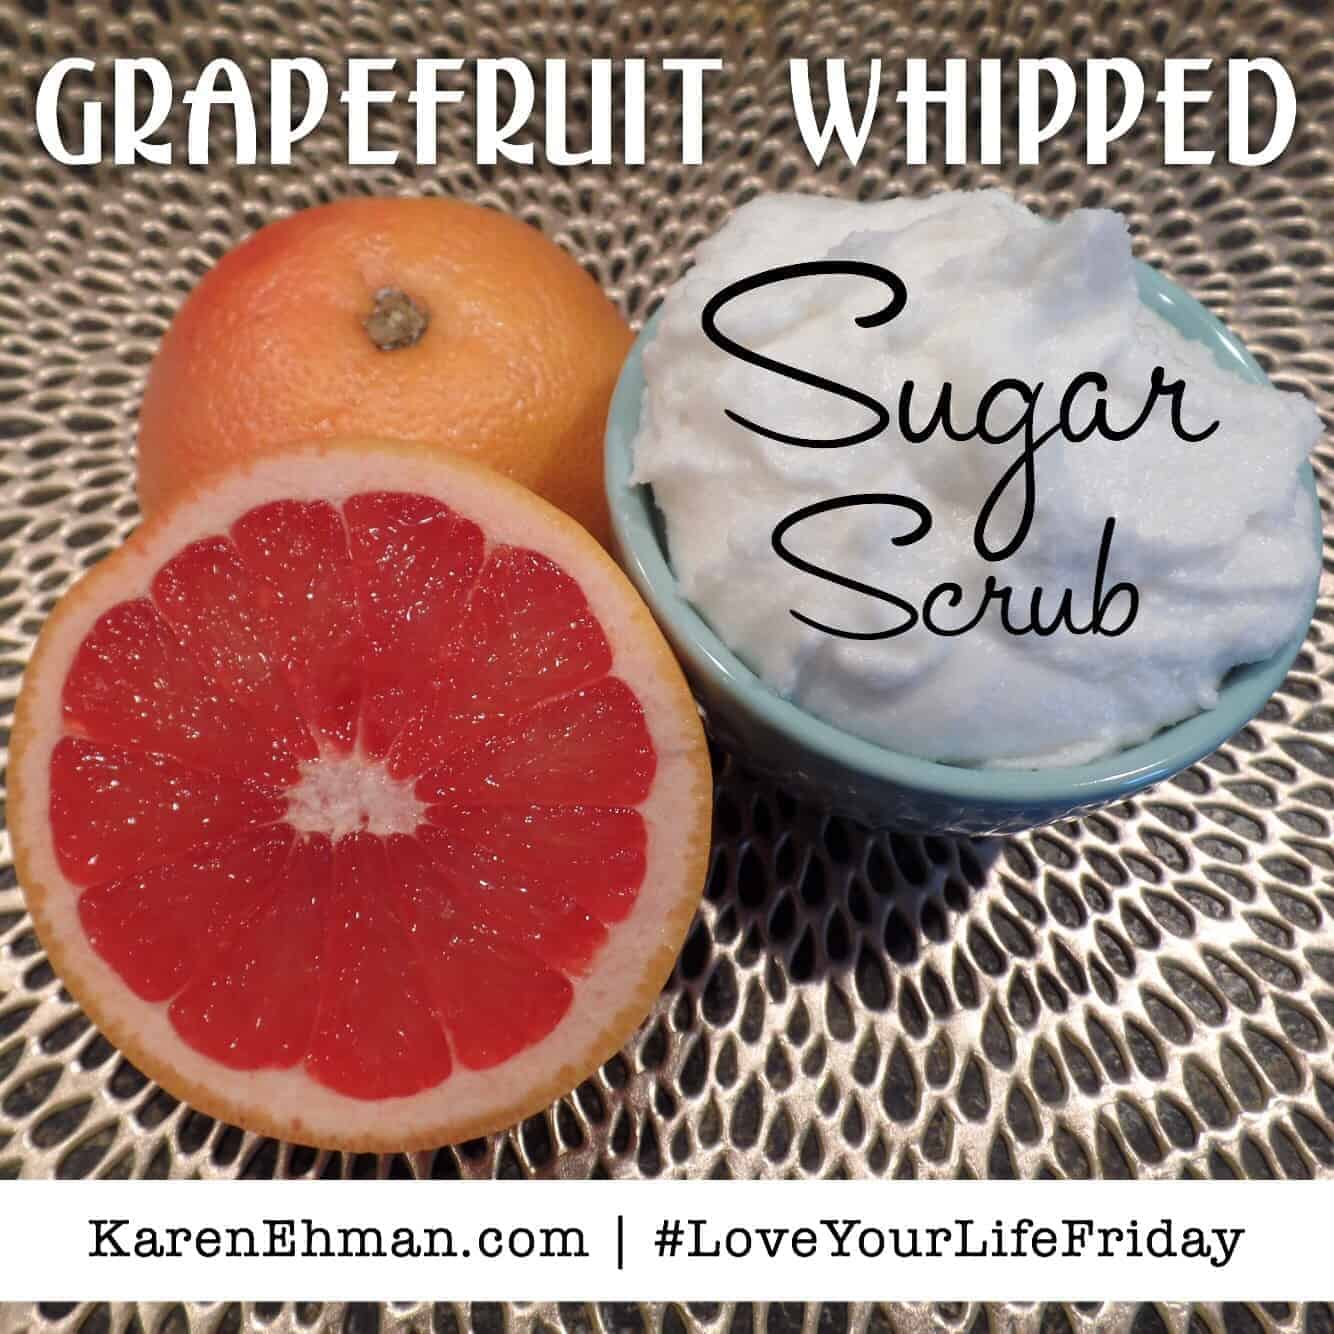 Grapefruit Whipped Sugar Scrub for #LoveYourLifeFriday